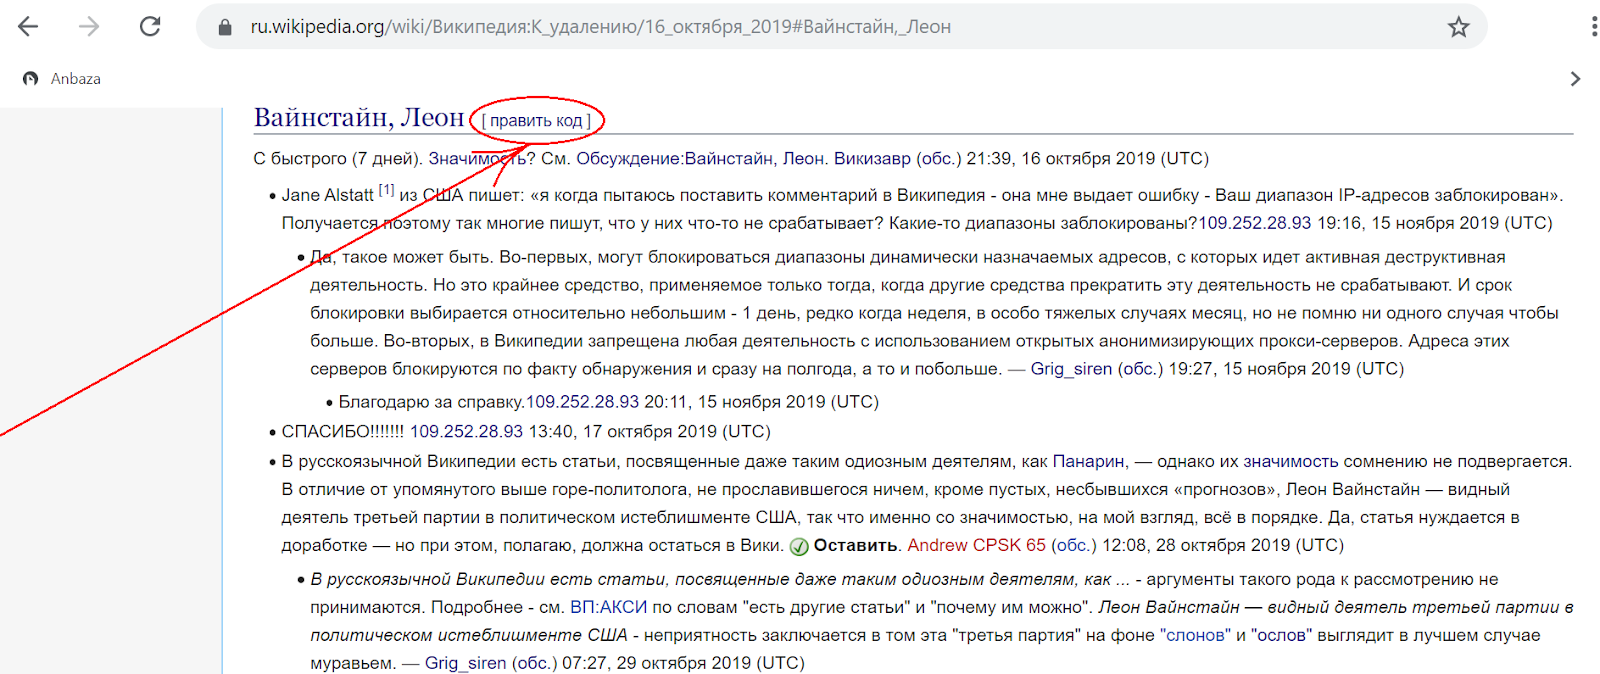 Https ru wikipedia org w index php. Википедия цвета ссылок. Скриншоты изменений в Википедии. Wiki org.